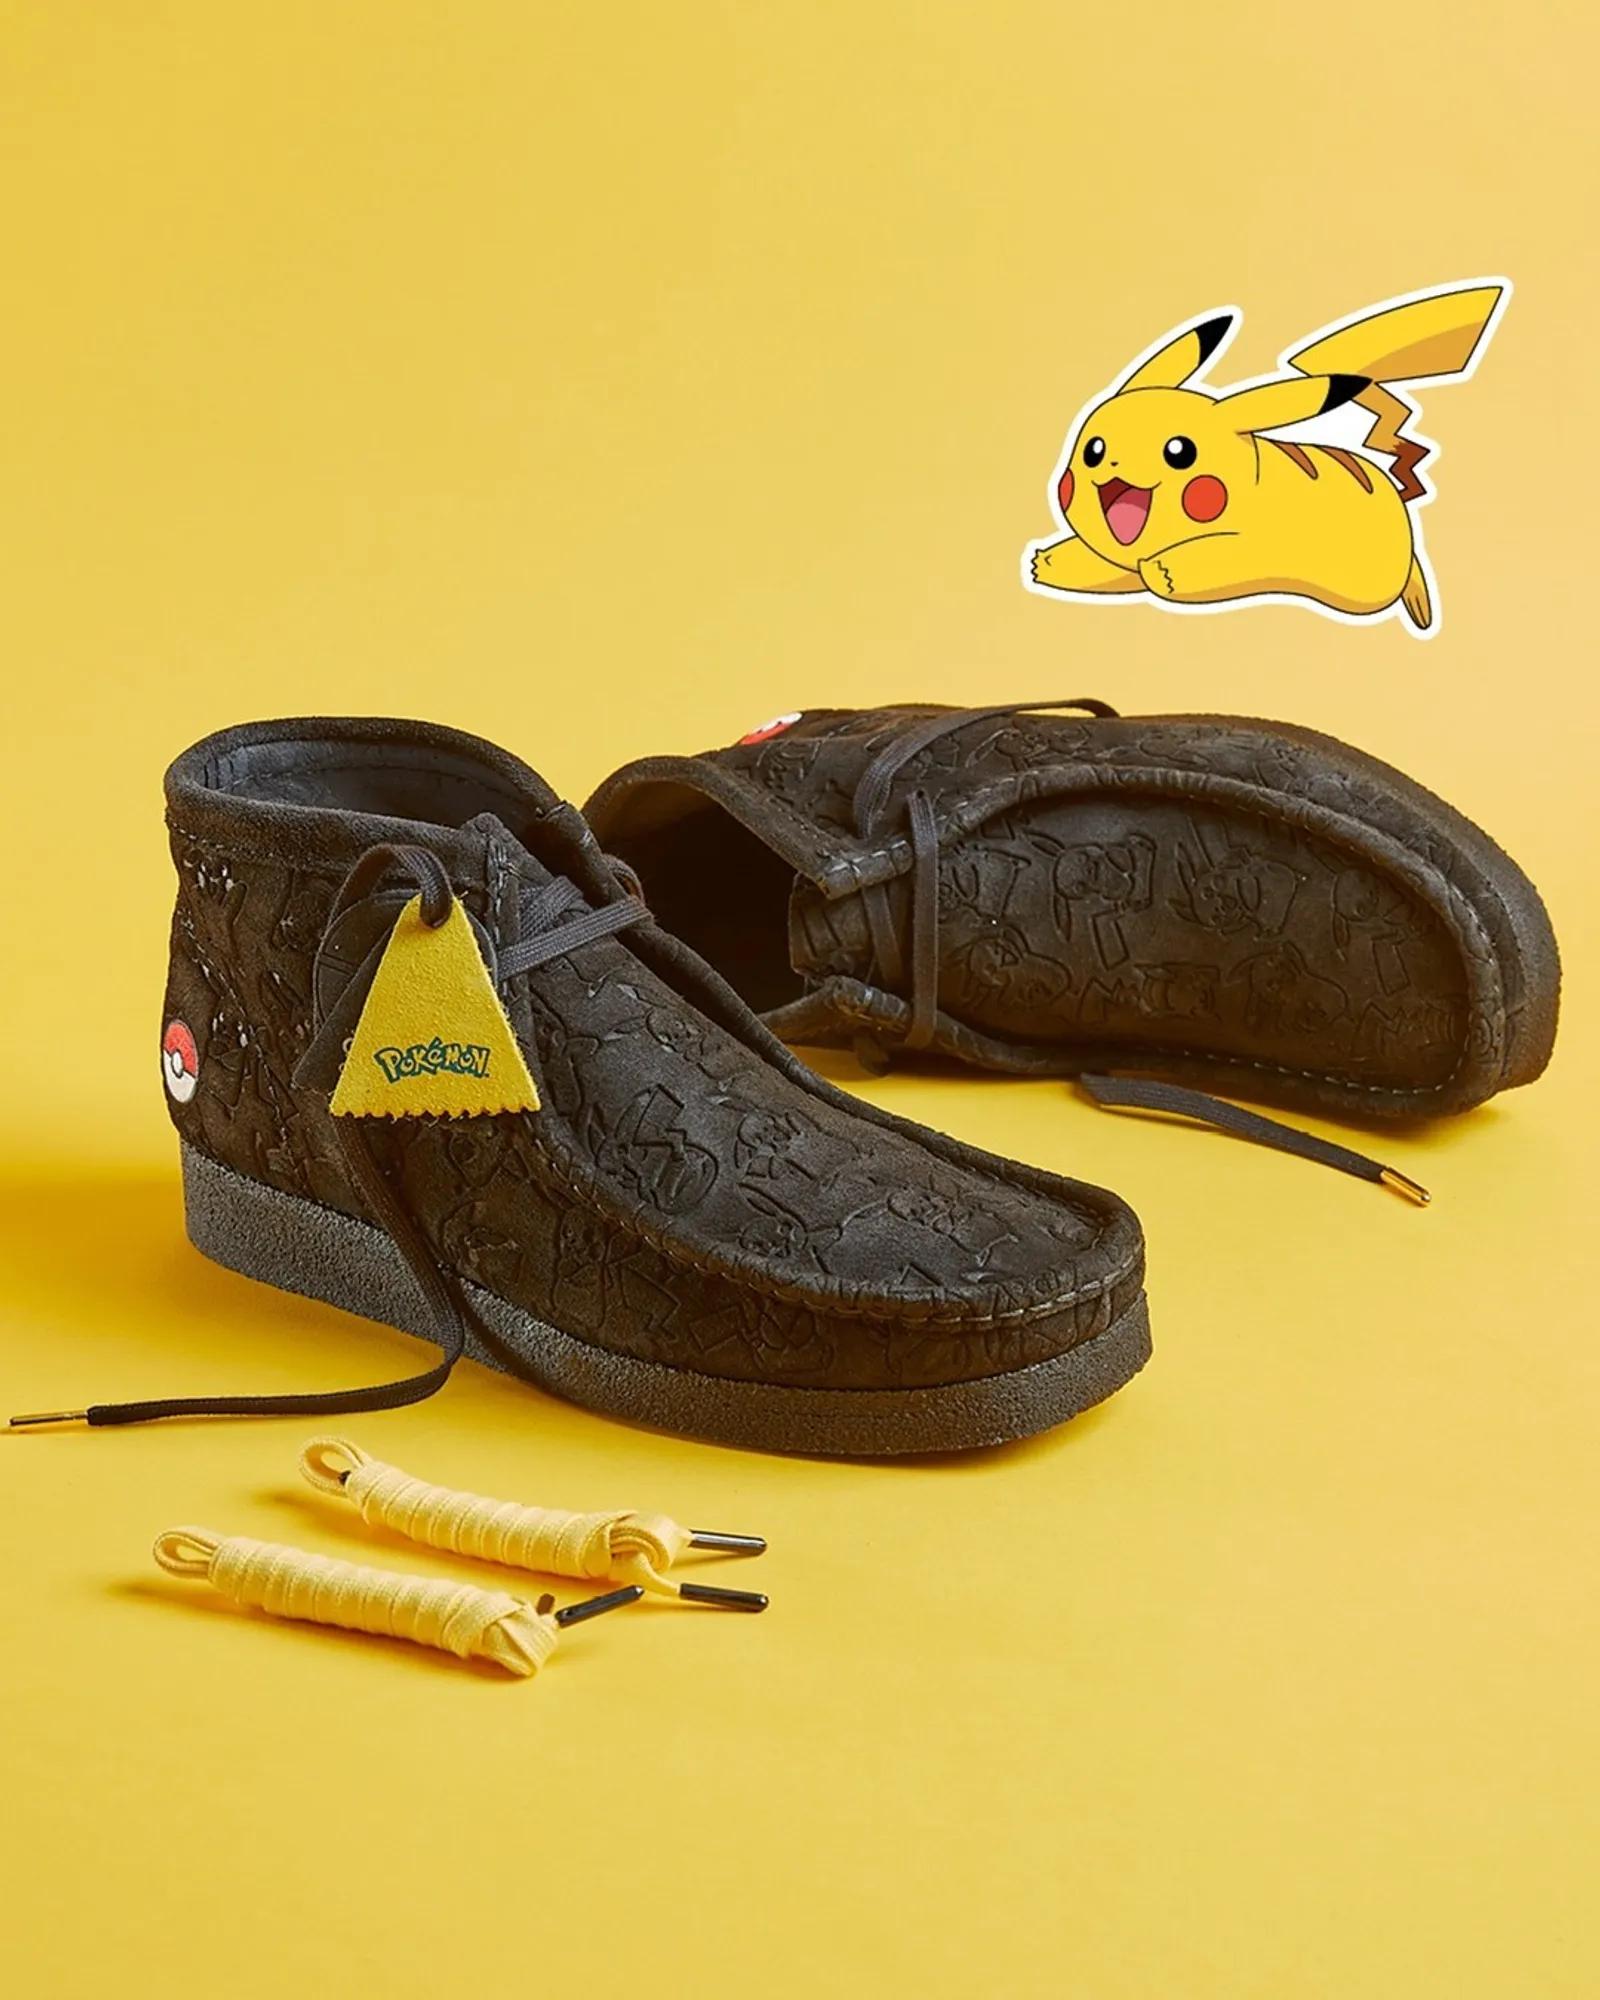 Gemasnya Sepatu Clarks Terbaru dengan Detail Pikachu!